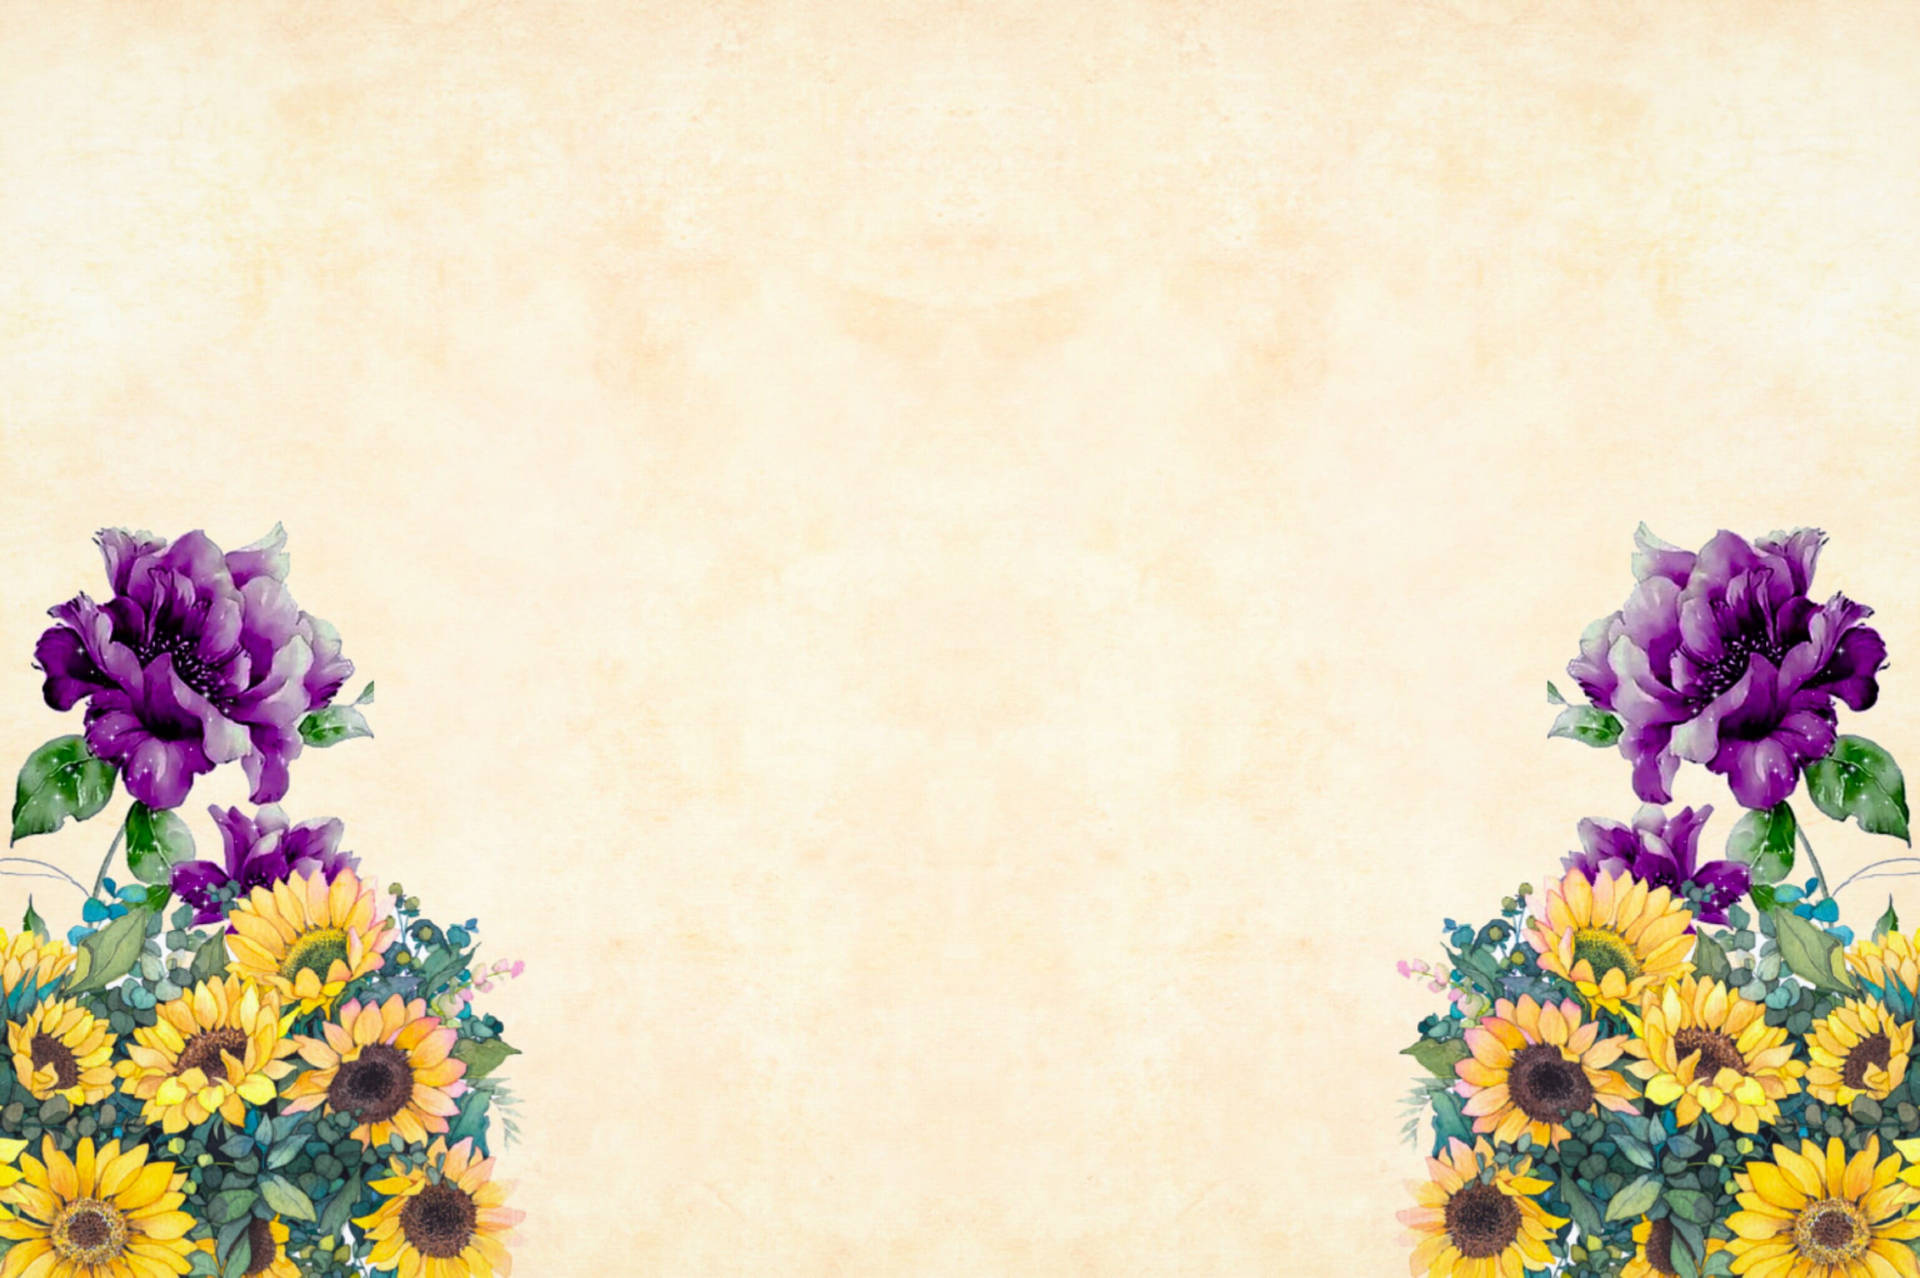 Background Design With Sunflower Wallpaper